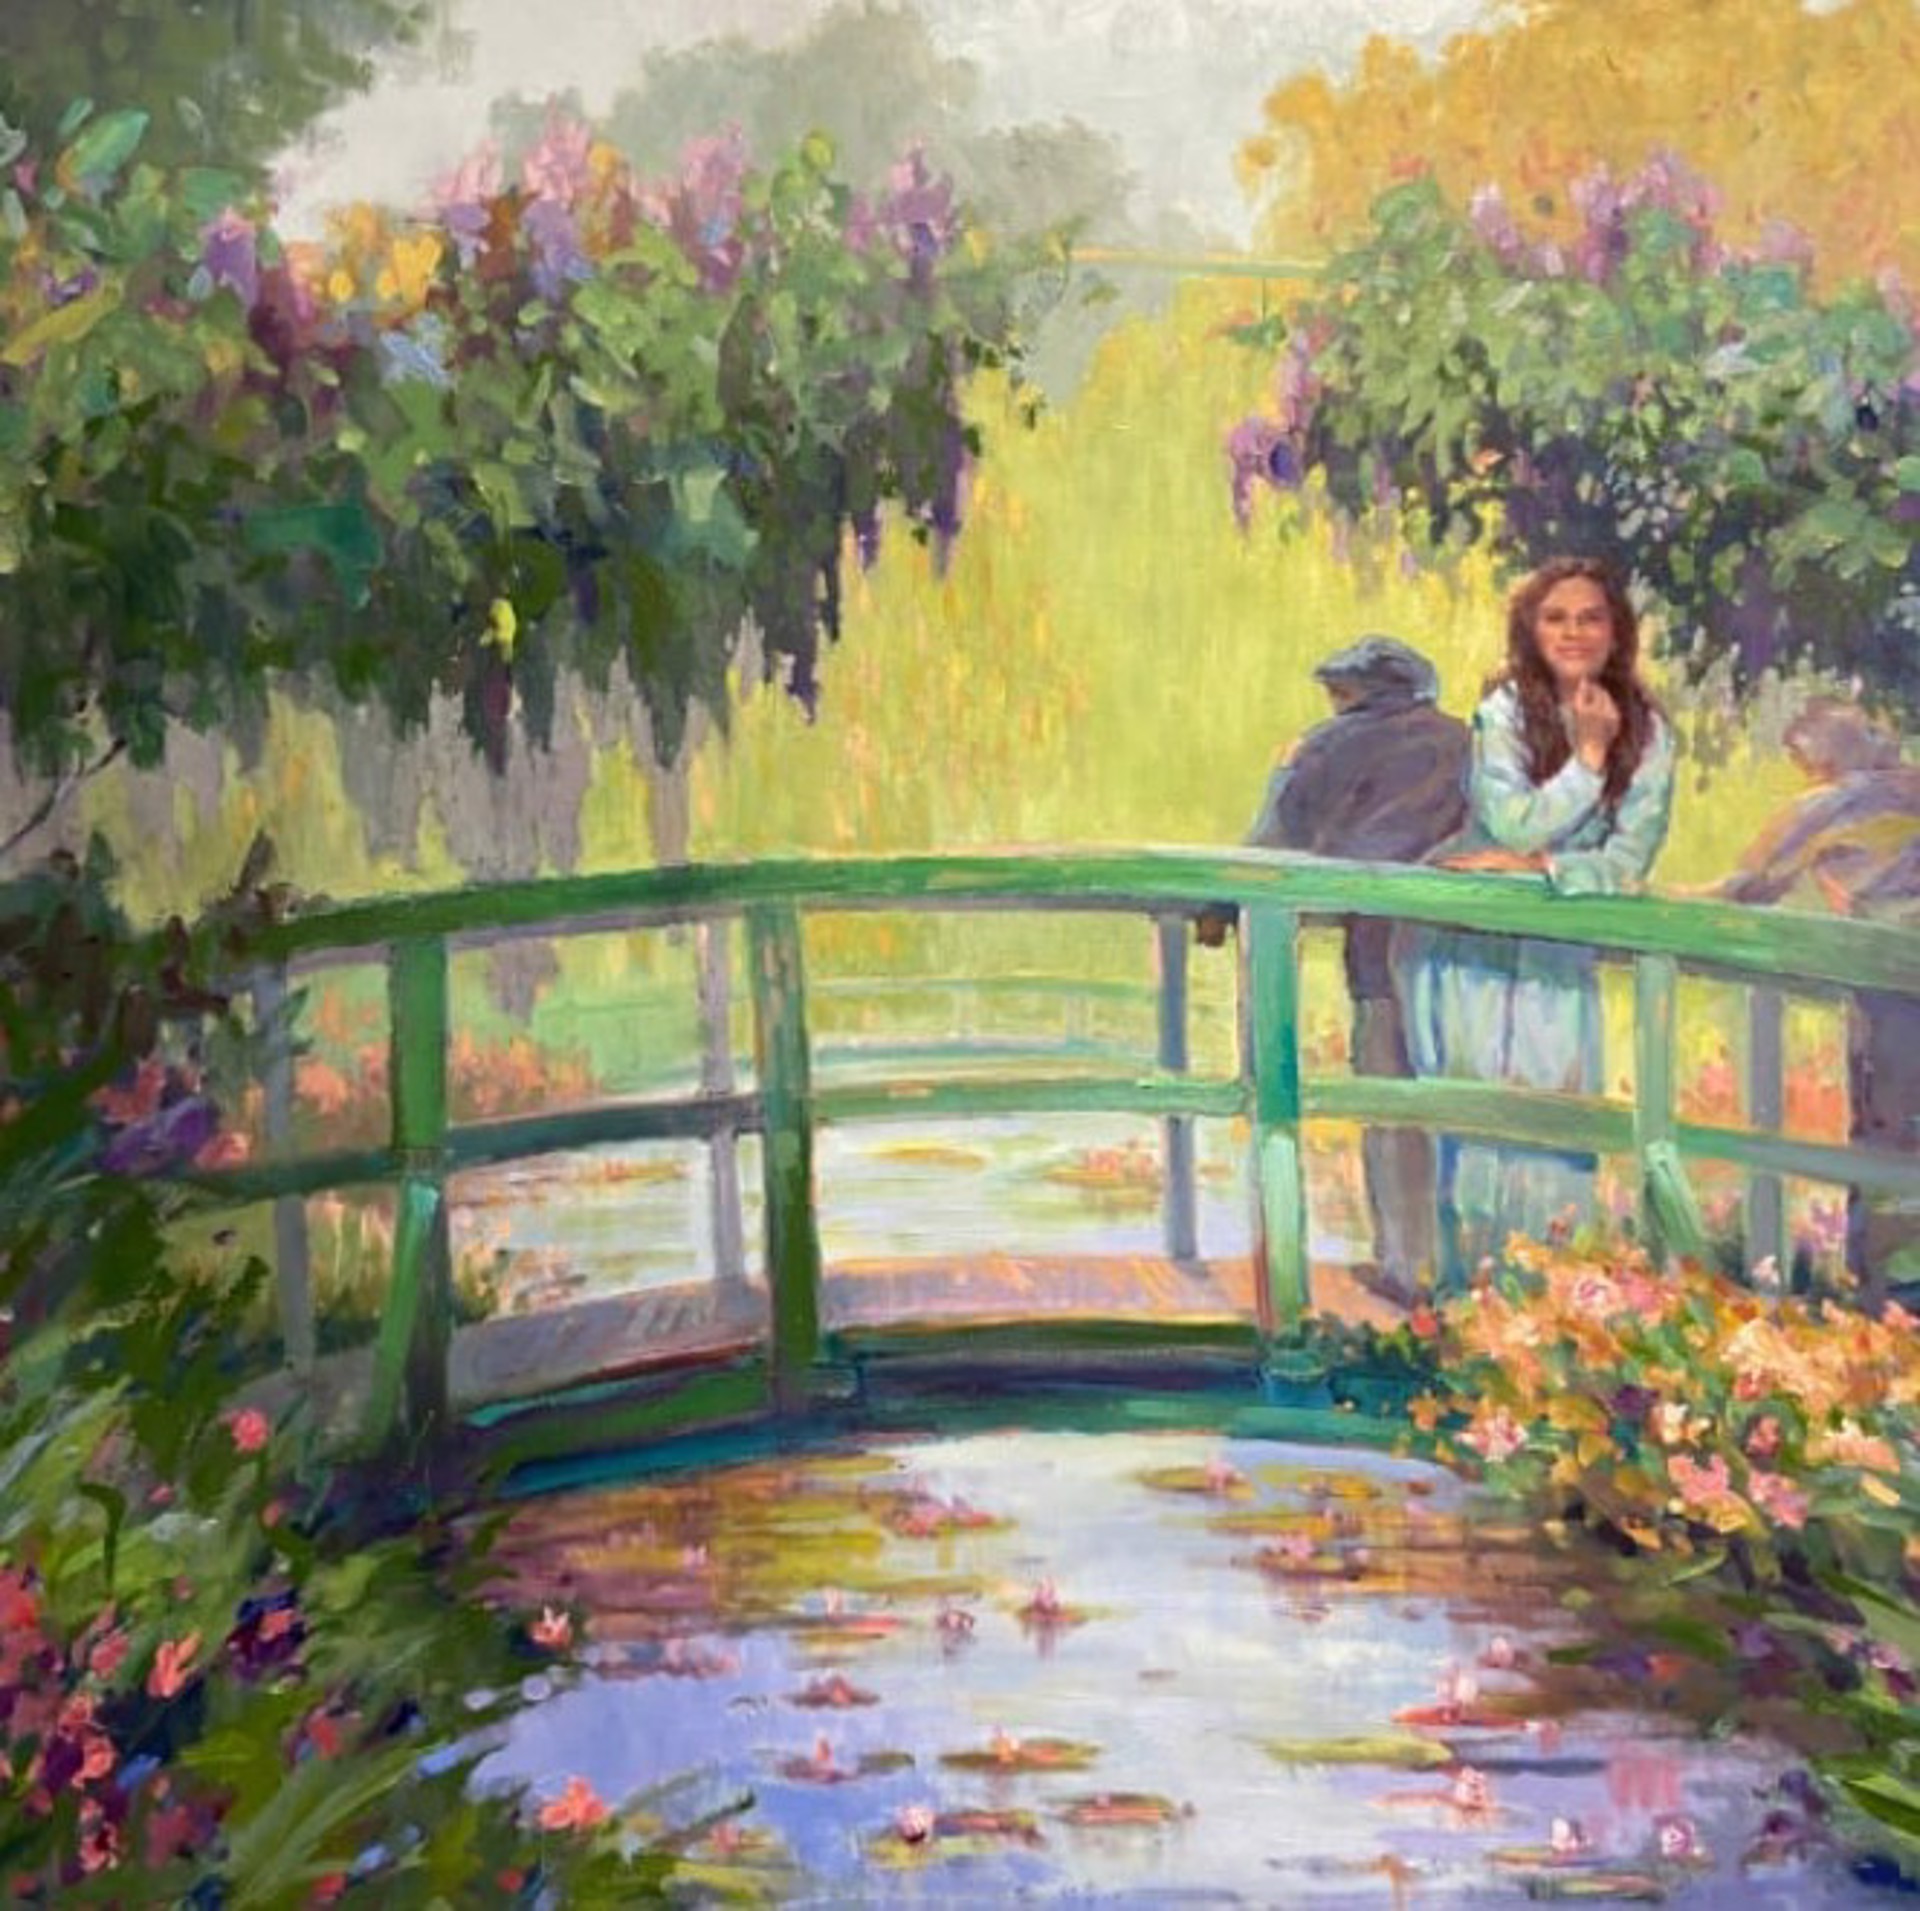 Moment at Monet's Garden by Linda Richichi